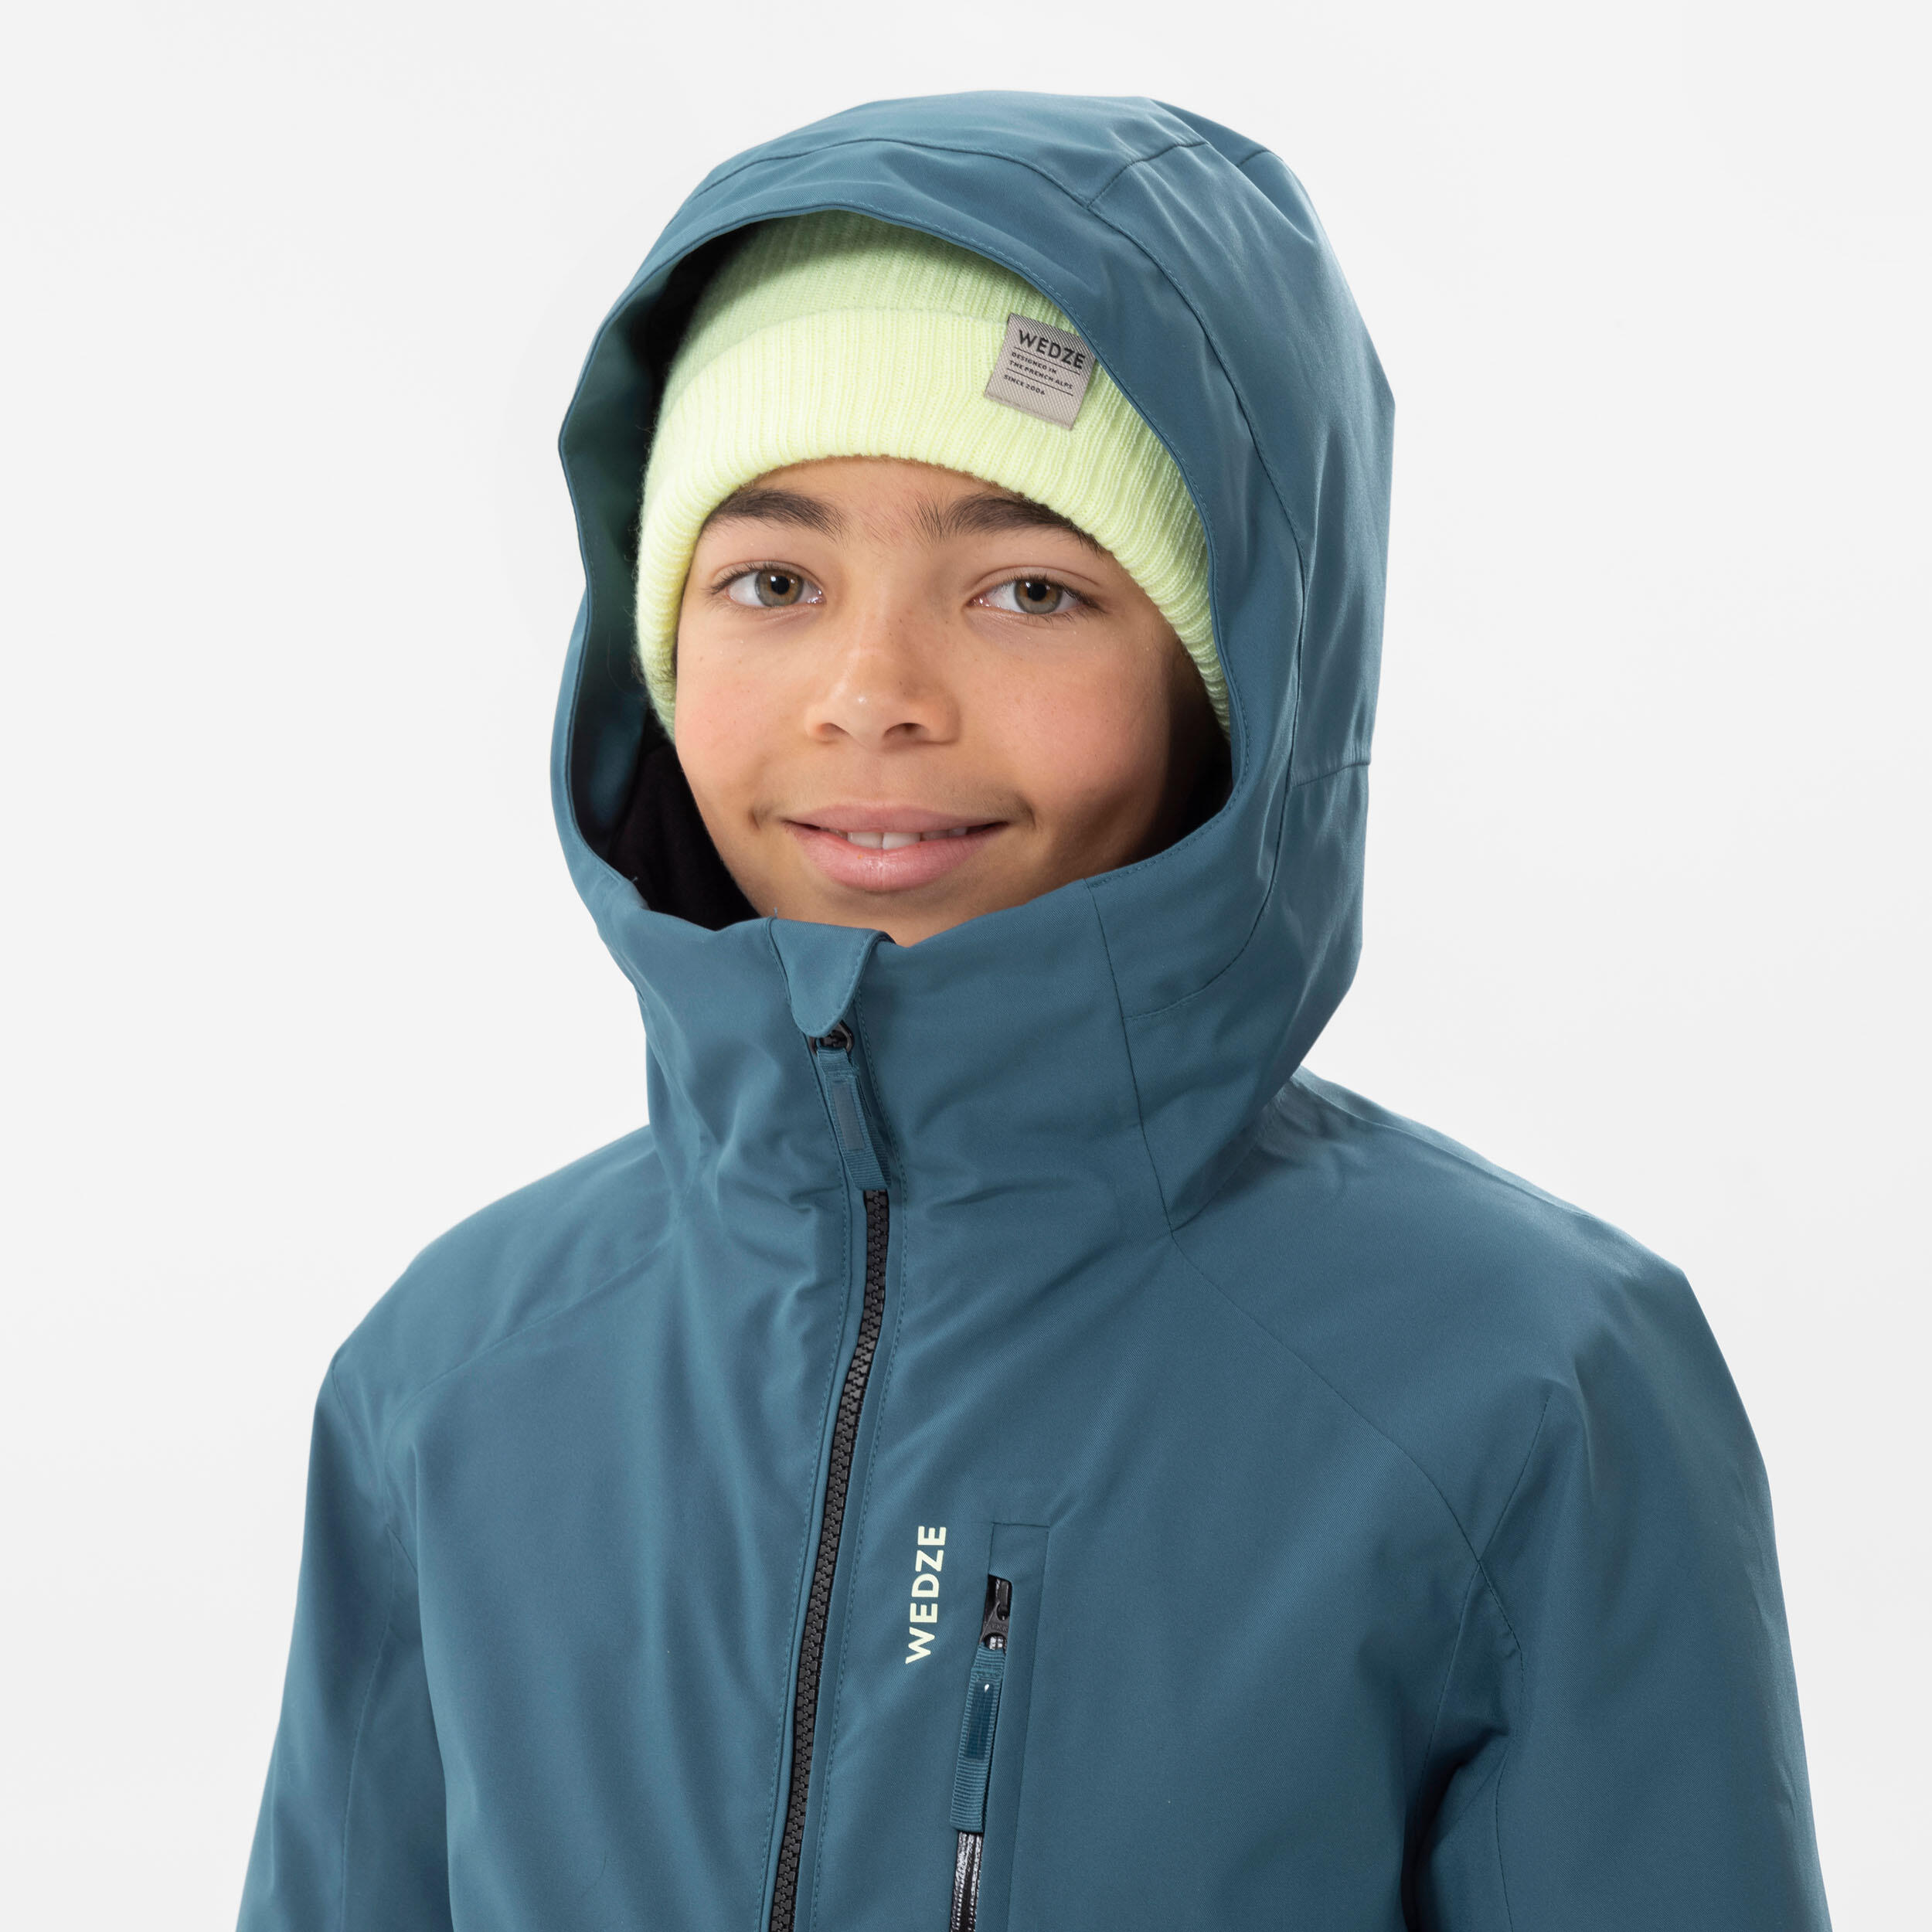 Kids' Warm Ski Jacket - Ski 550 Blue - Deep teal - Wedze - Decathlon